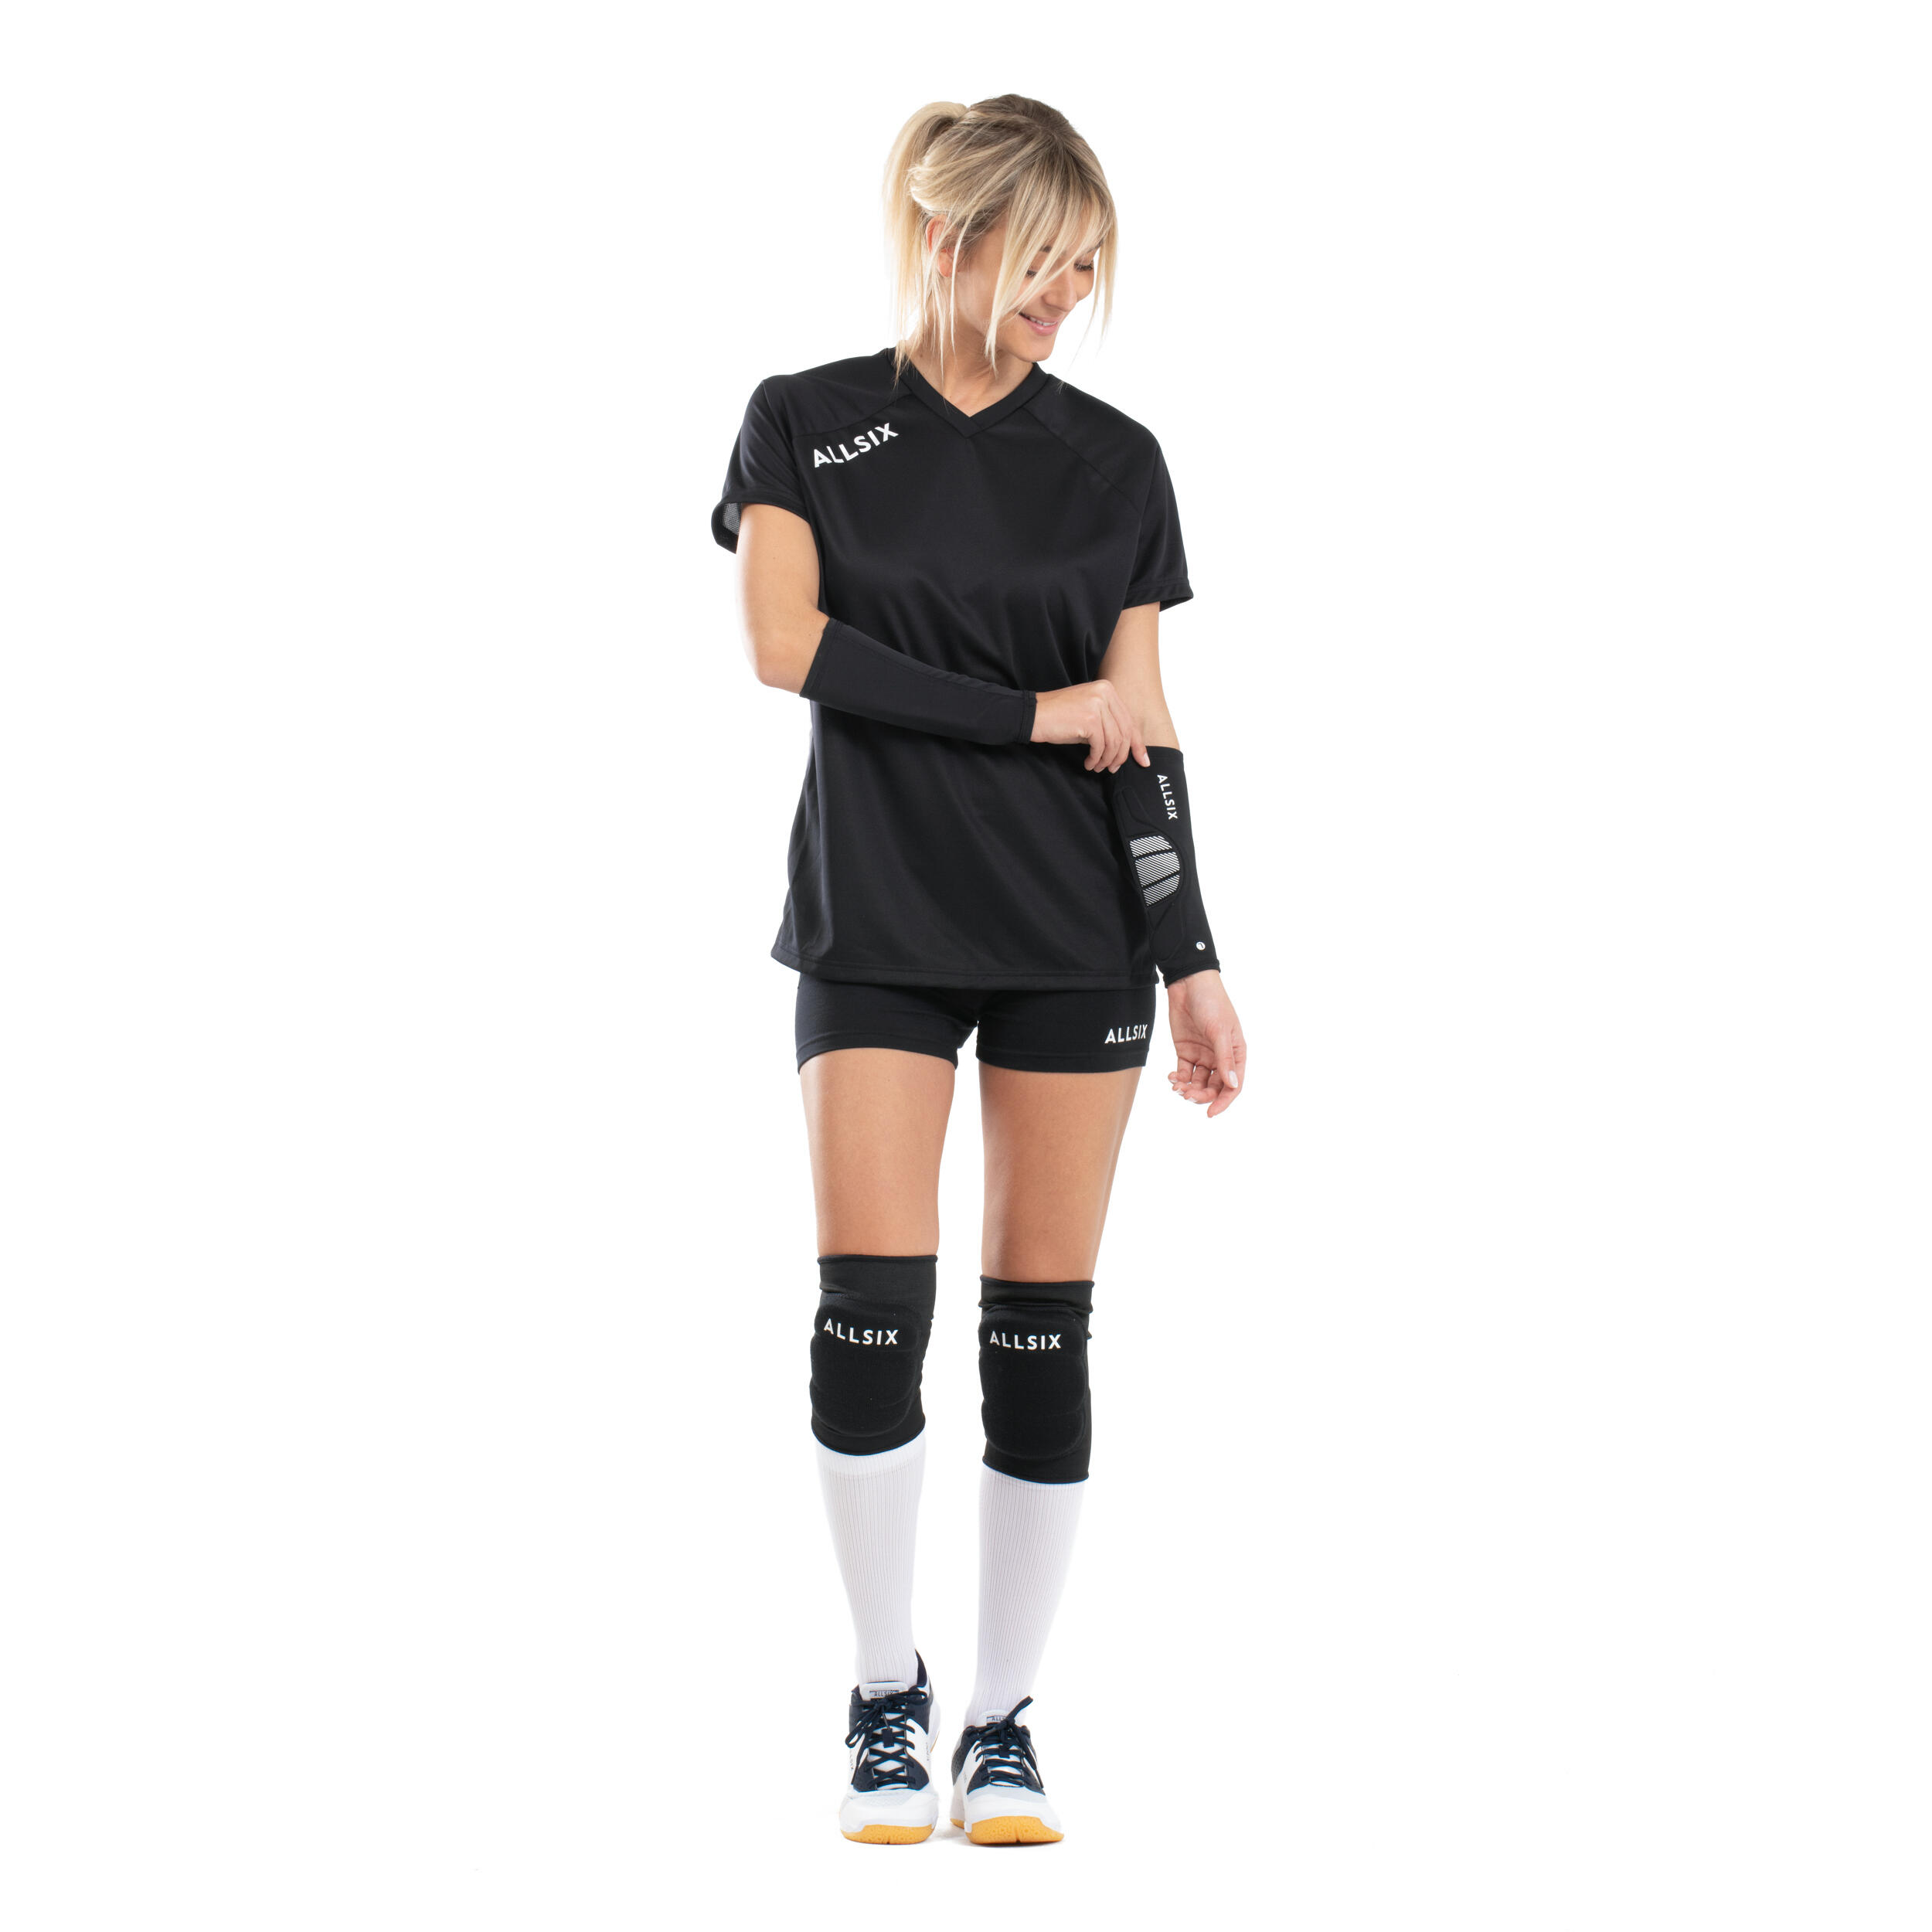 VAP100 Volleyball Sleeves - Black 11/19